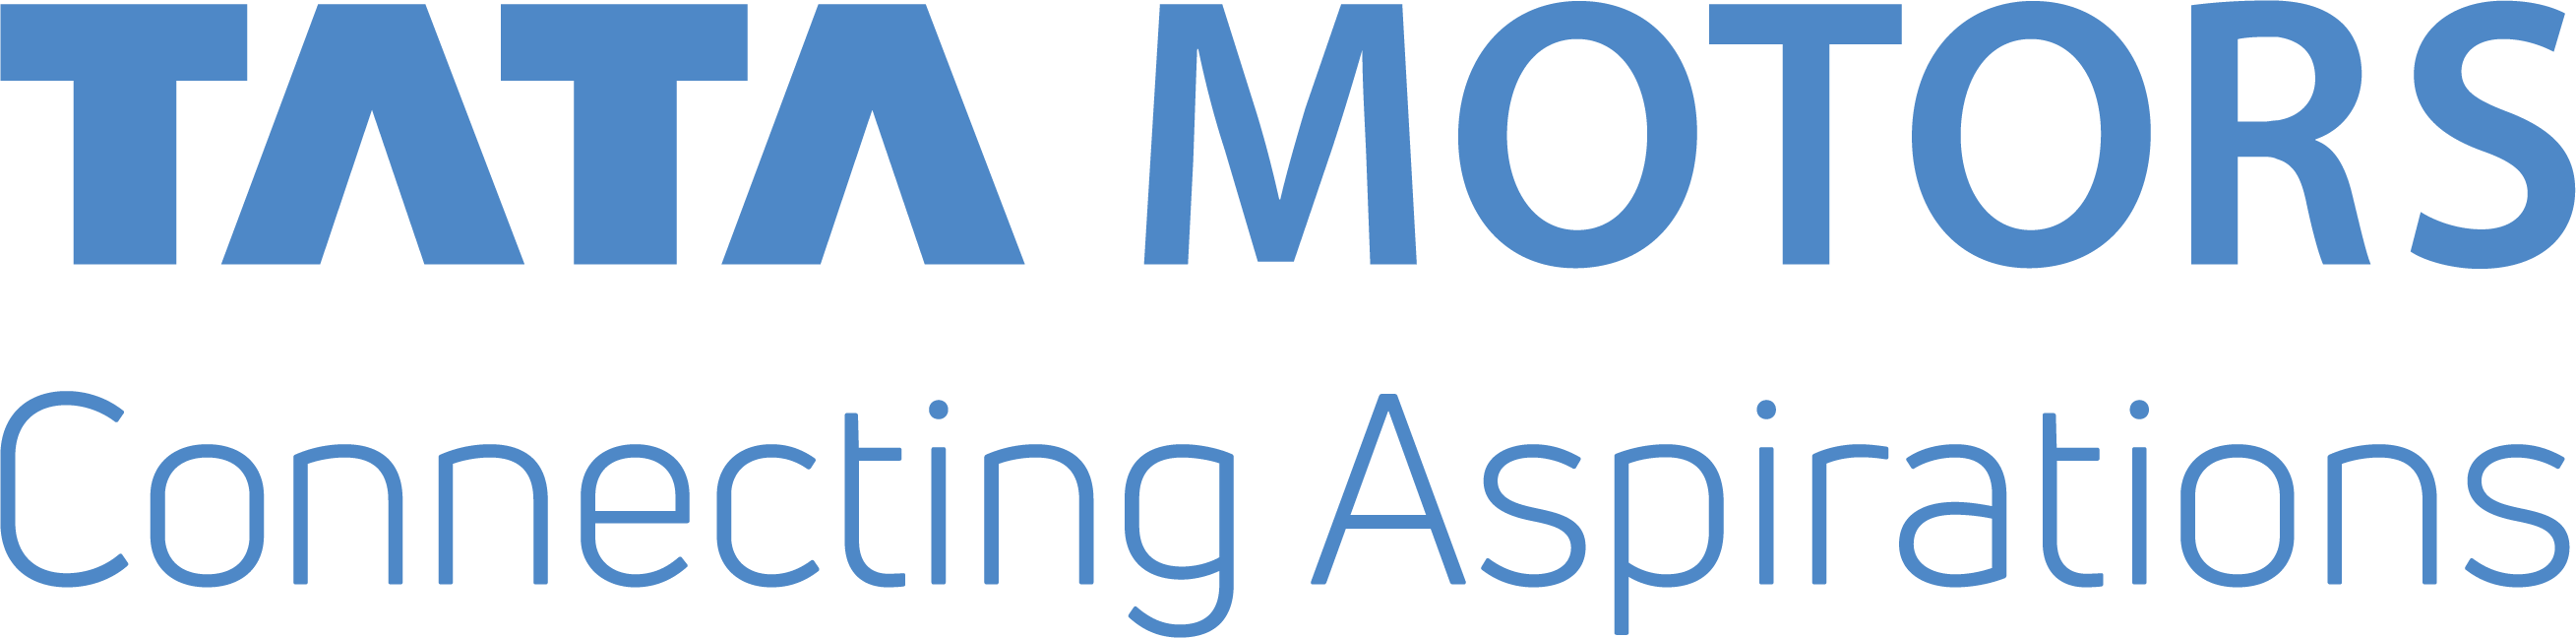 Tata Motors Logo Connecting Aspirations